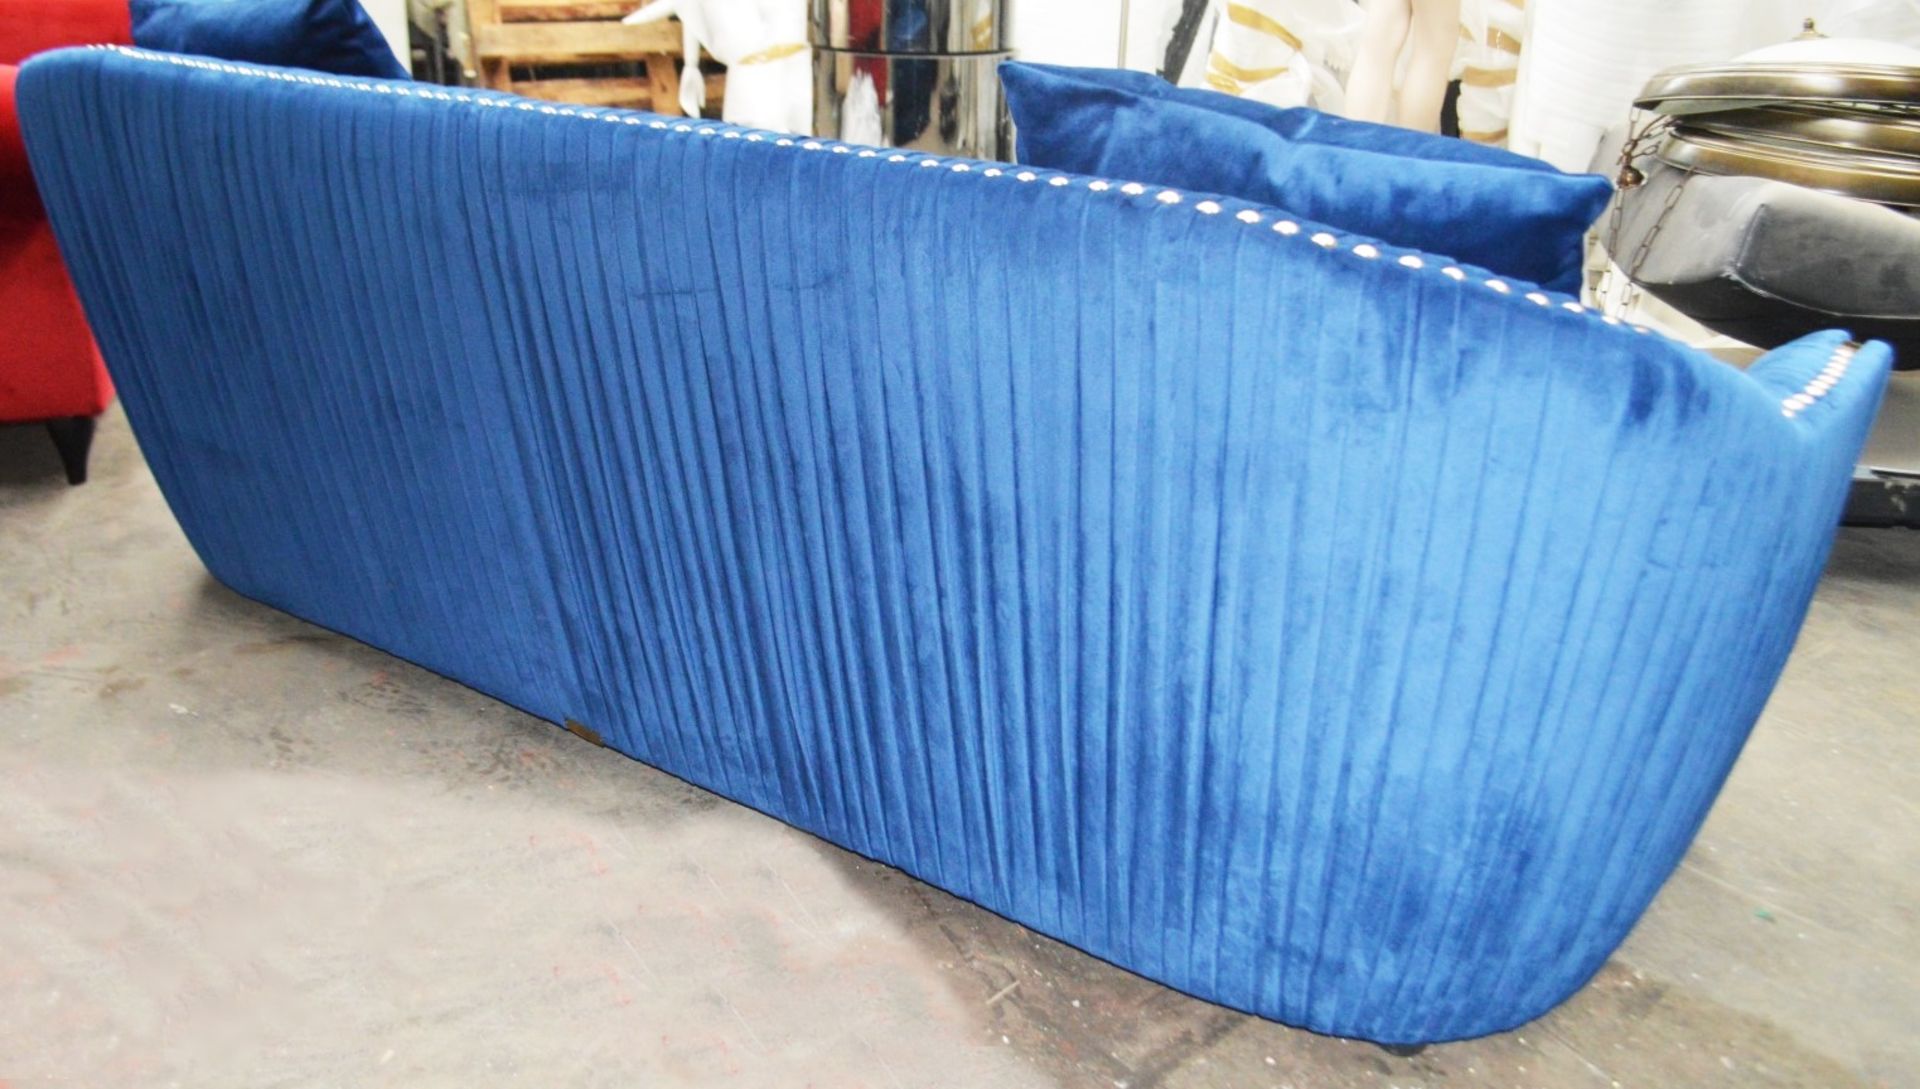 1 x Bespoke Blue Velvet Button-Back Sofa In A Rich Royal Blue Velvet With Detailing In Gold - Image 6 of 8